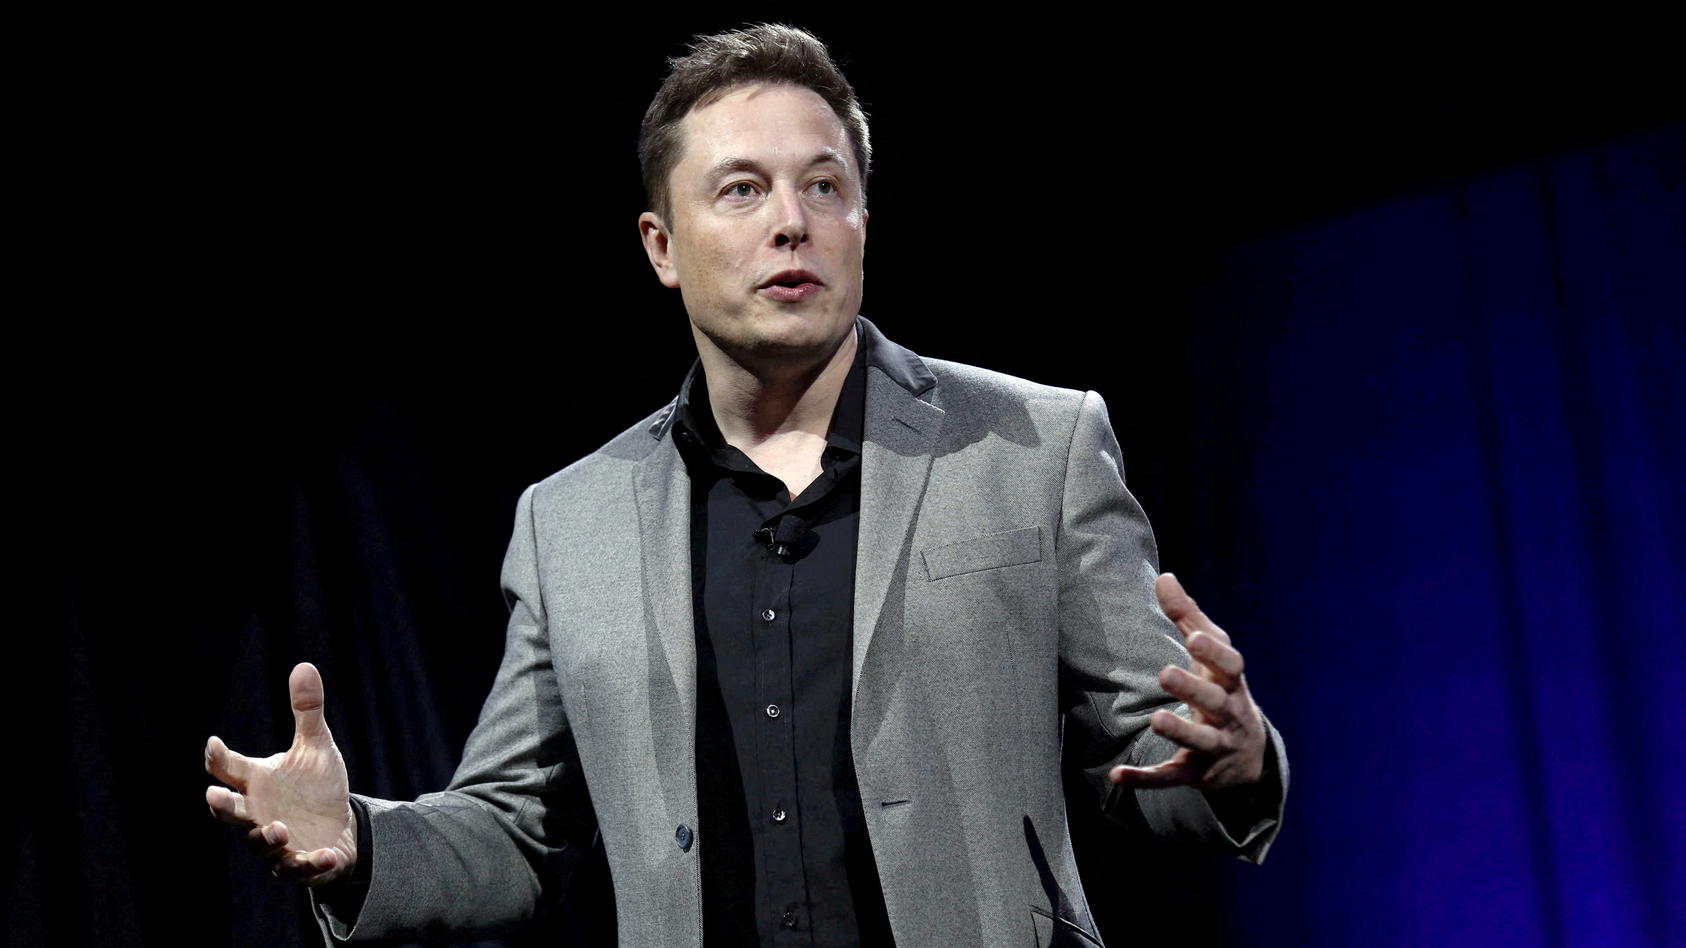 FILE PHOTO: Tesla CEO Elon Musk speaks at an event in Hawthorne, California April 30, 2015. REUTERS/Patrick T. Fallon/File Photo